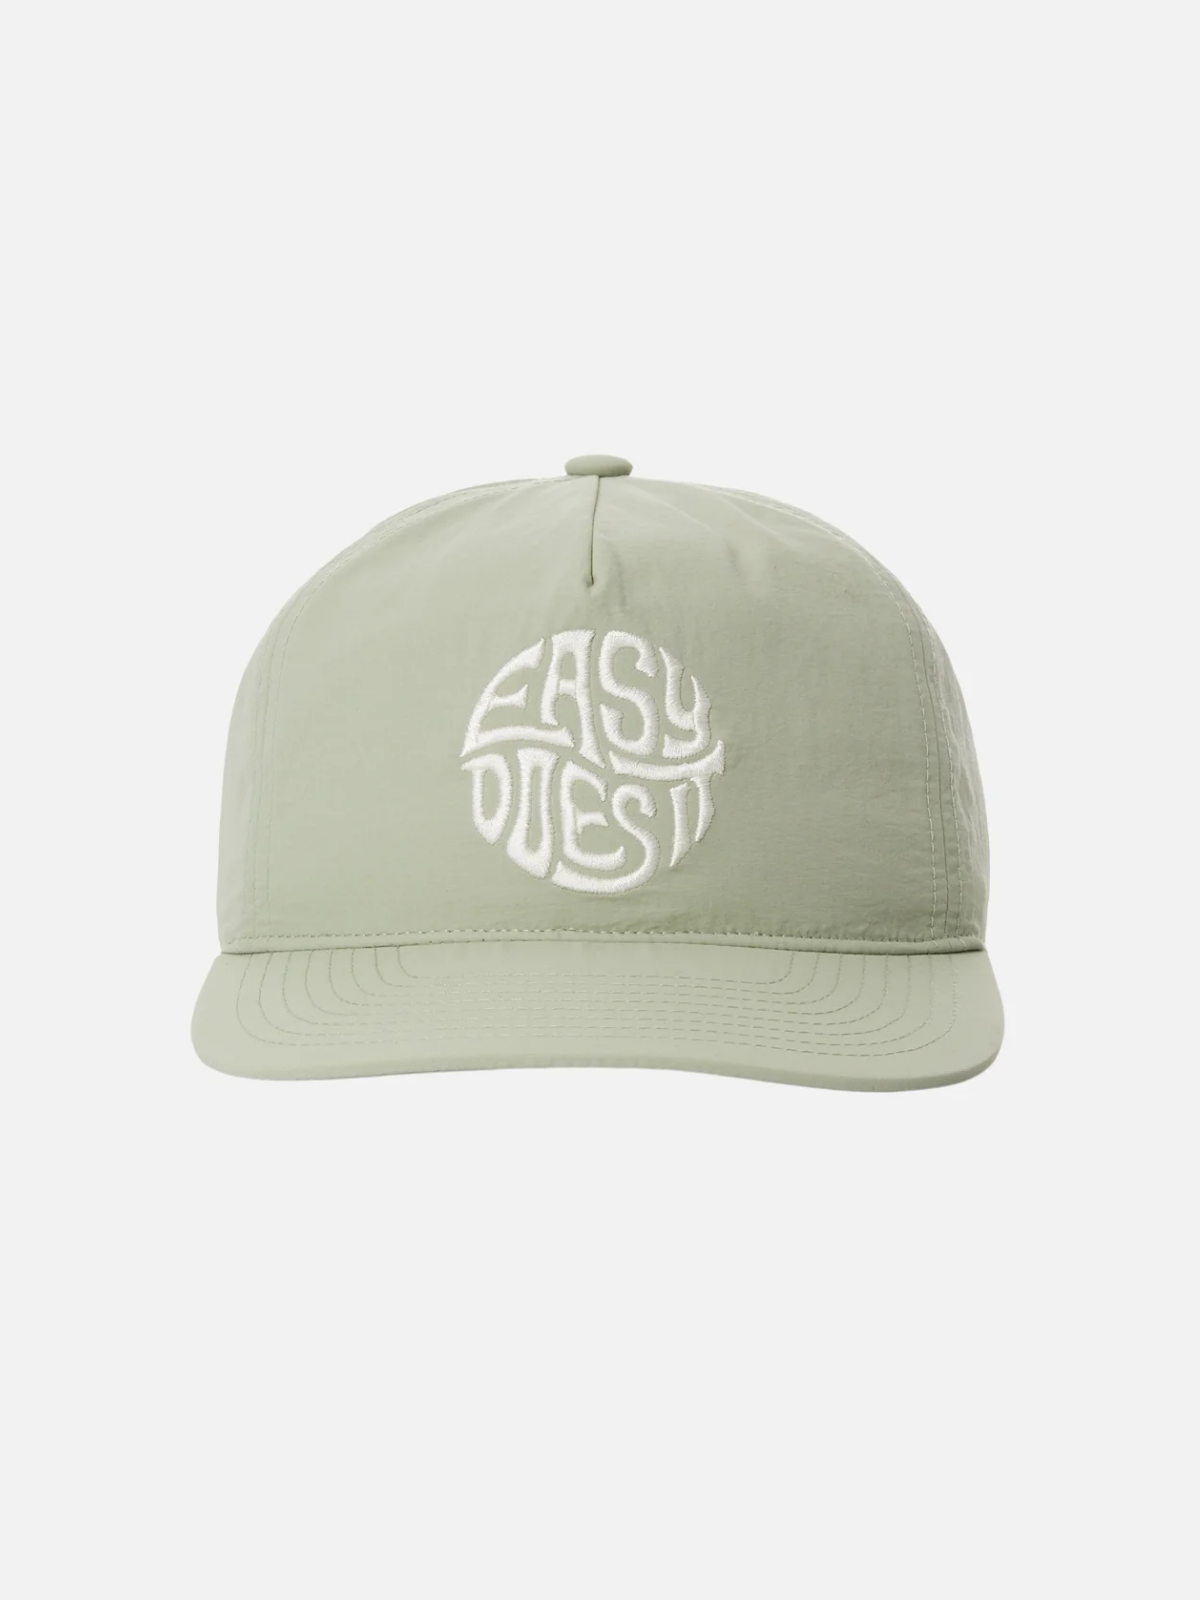 katin easy emblem hat hedge mint green 100% nylon snapback cap kempt athens ga georgia men's clothing store